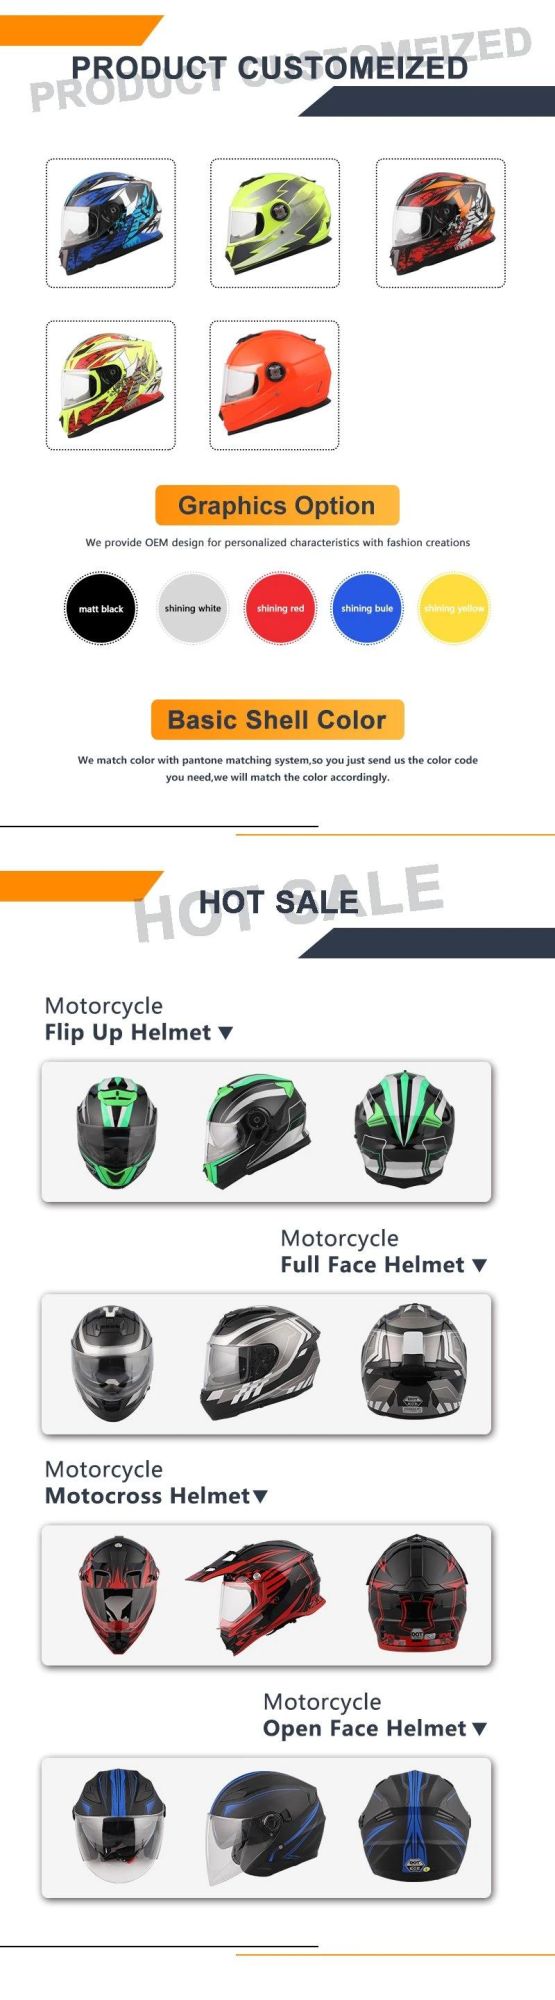 Hot Sale Motorcycle Helmets Aftermarket Motorcycle Parts Safety Helmet